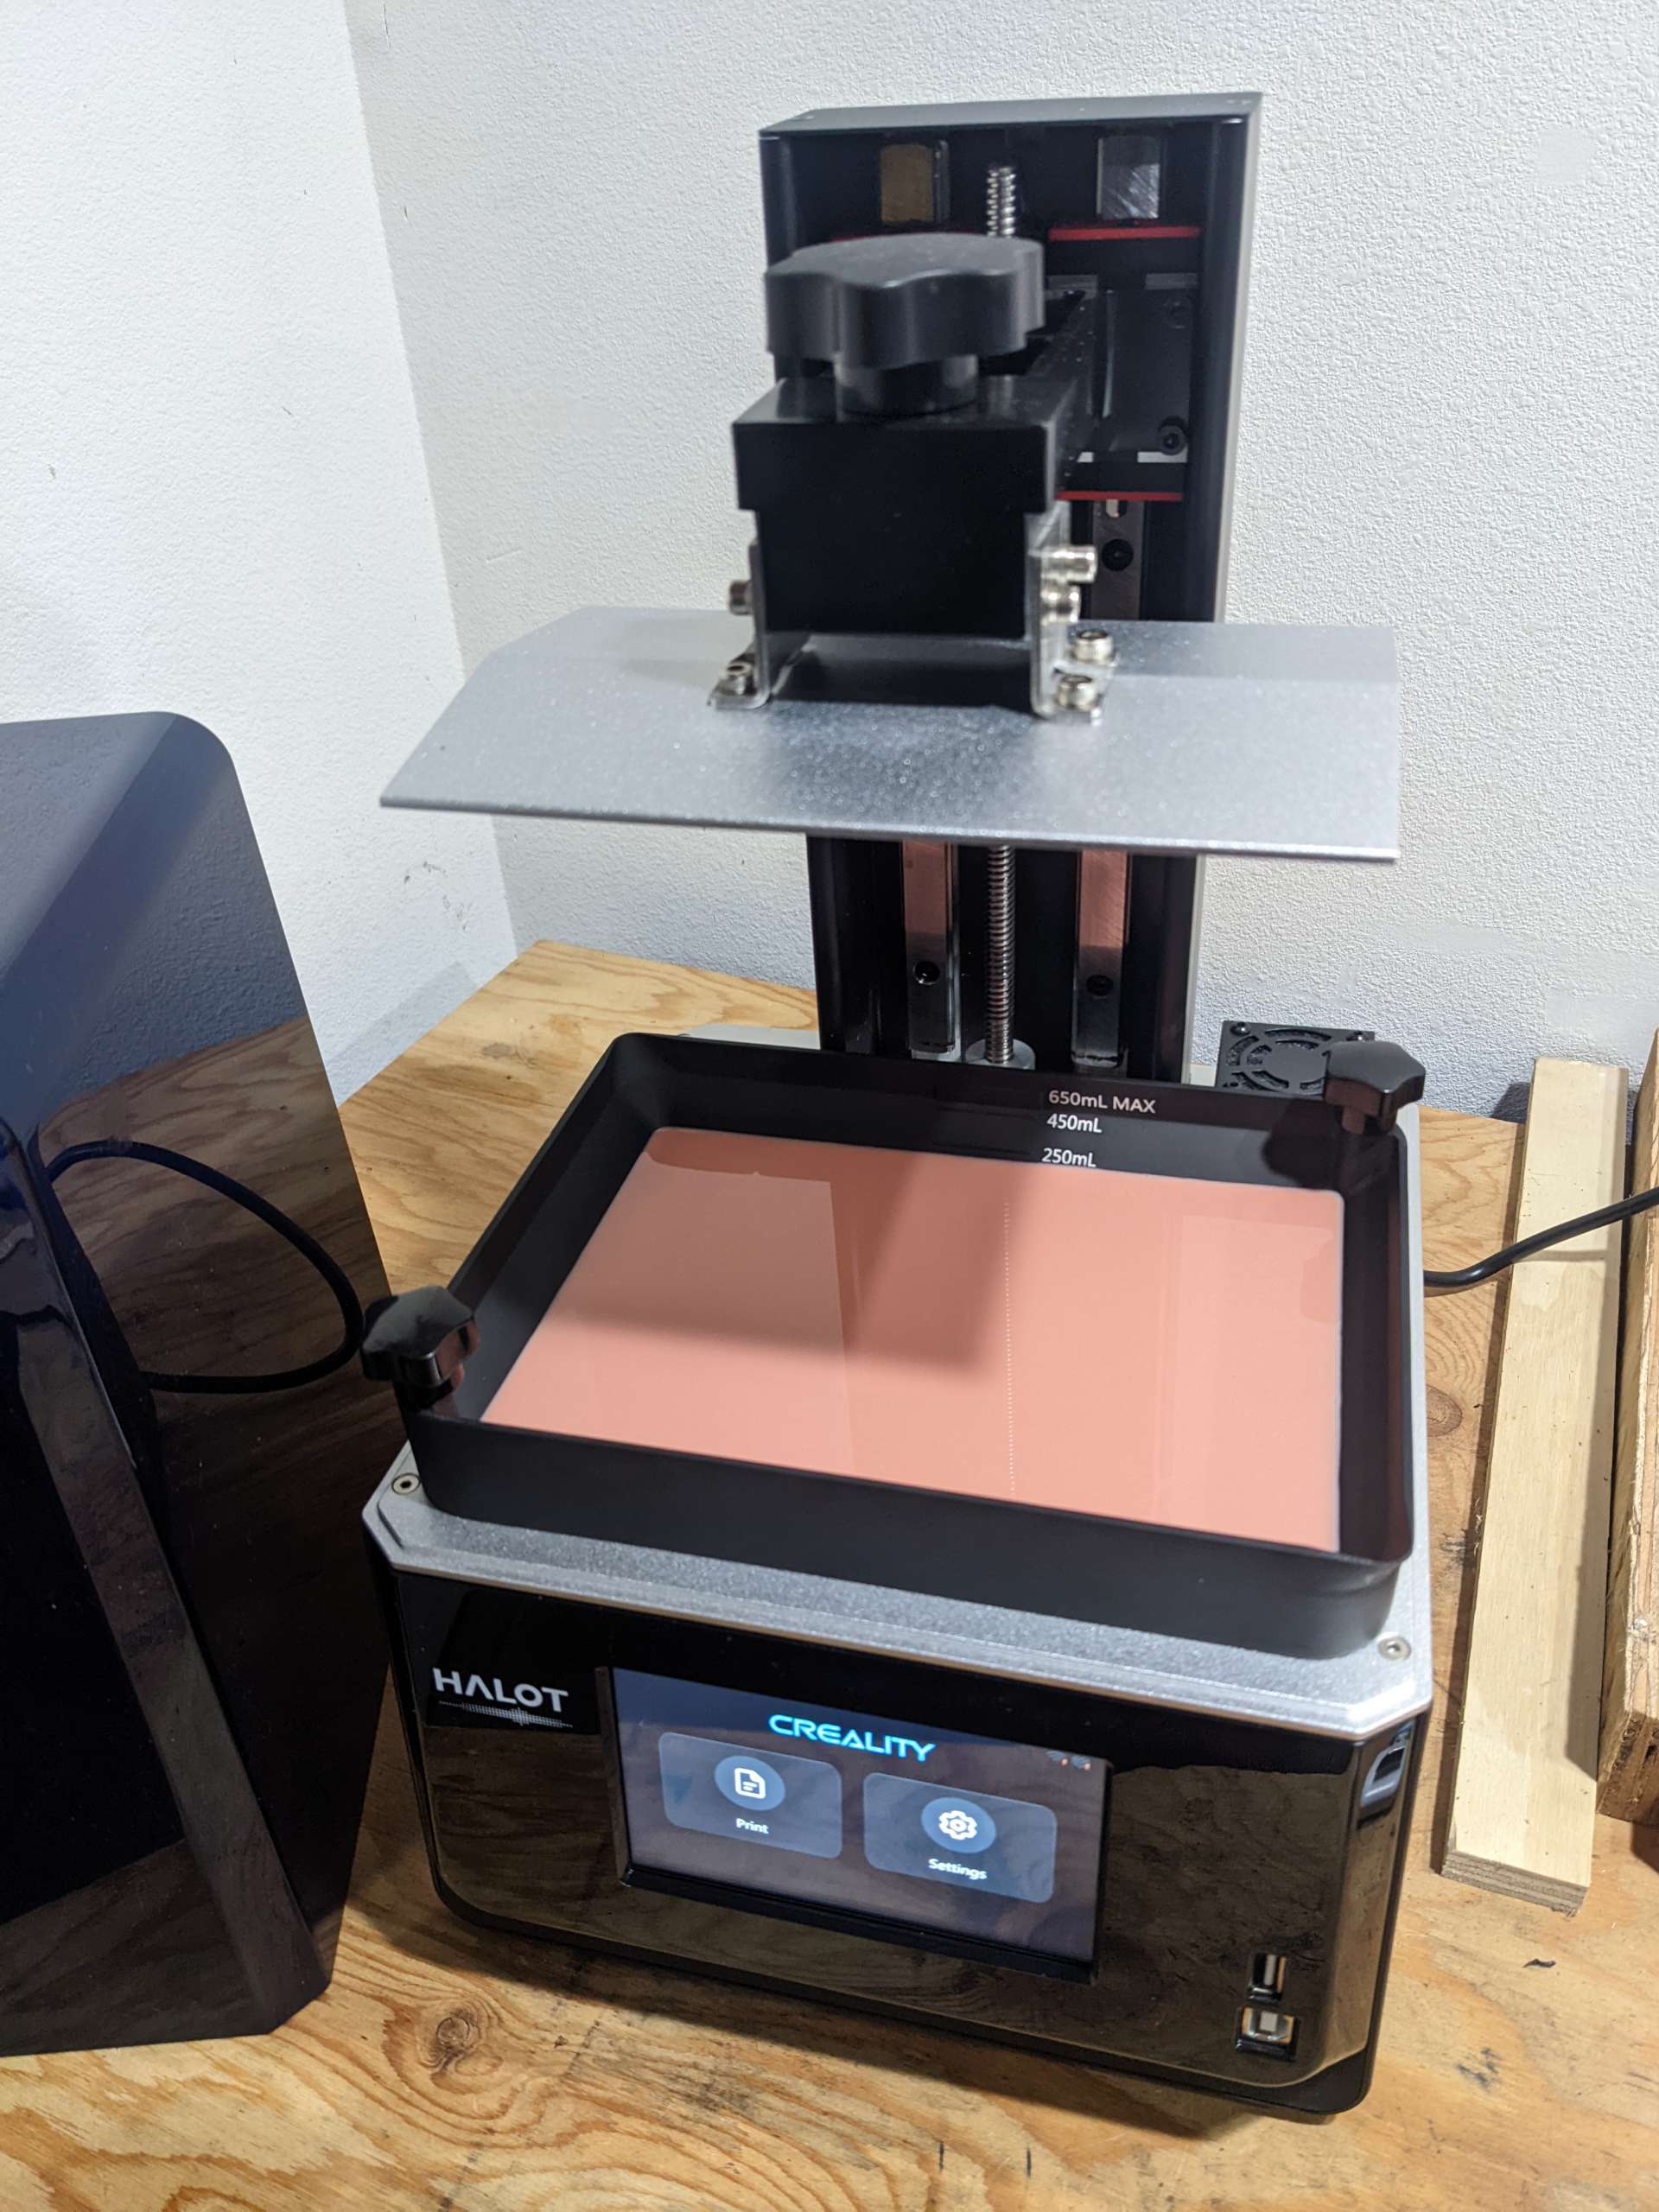 Creality Halot One Plus, 4K LCD Resin Printer